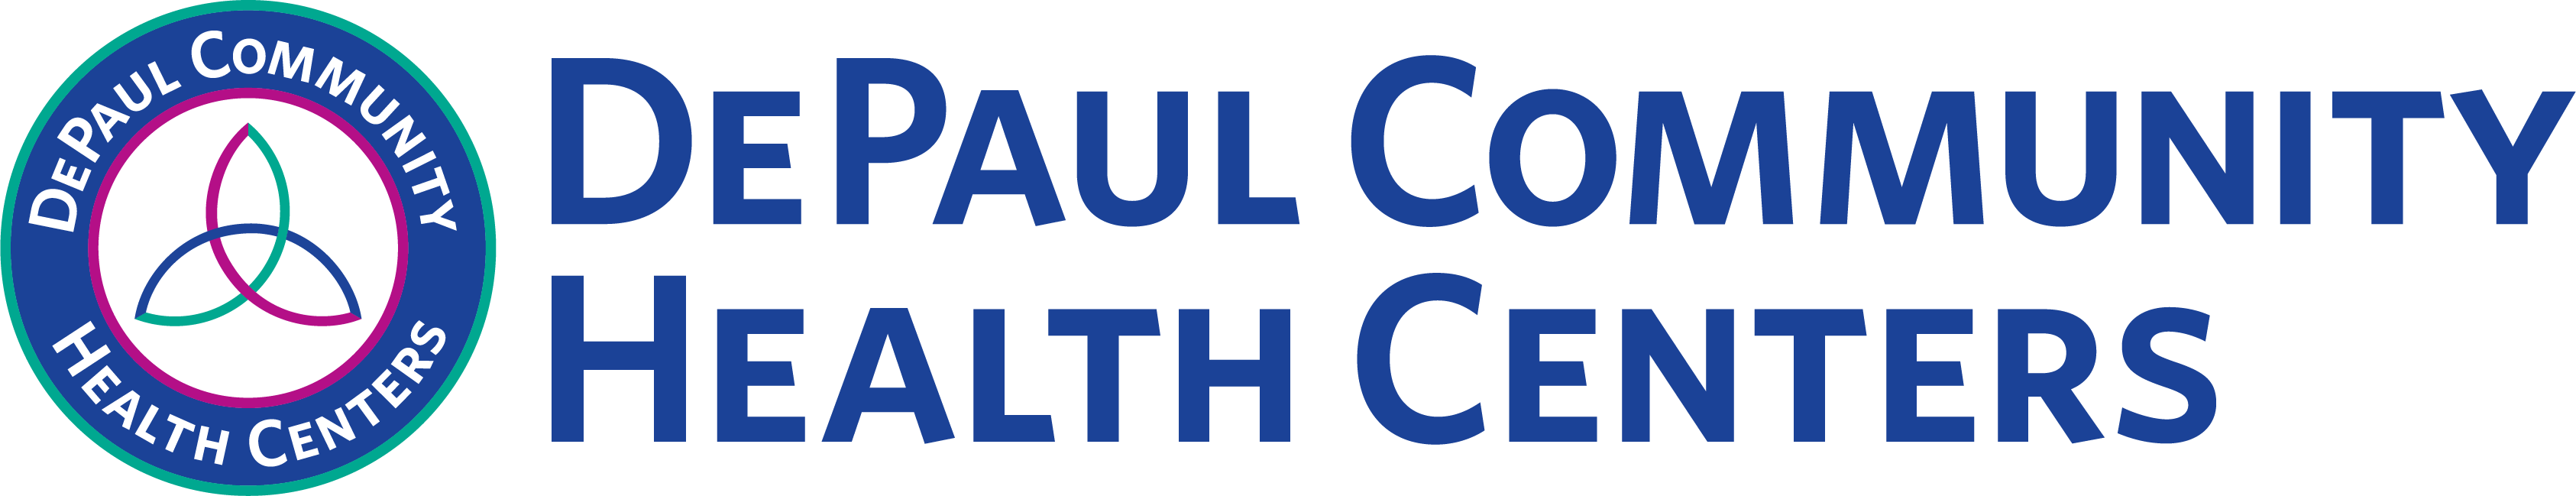 DePaul Community Health Centers logo